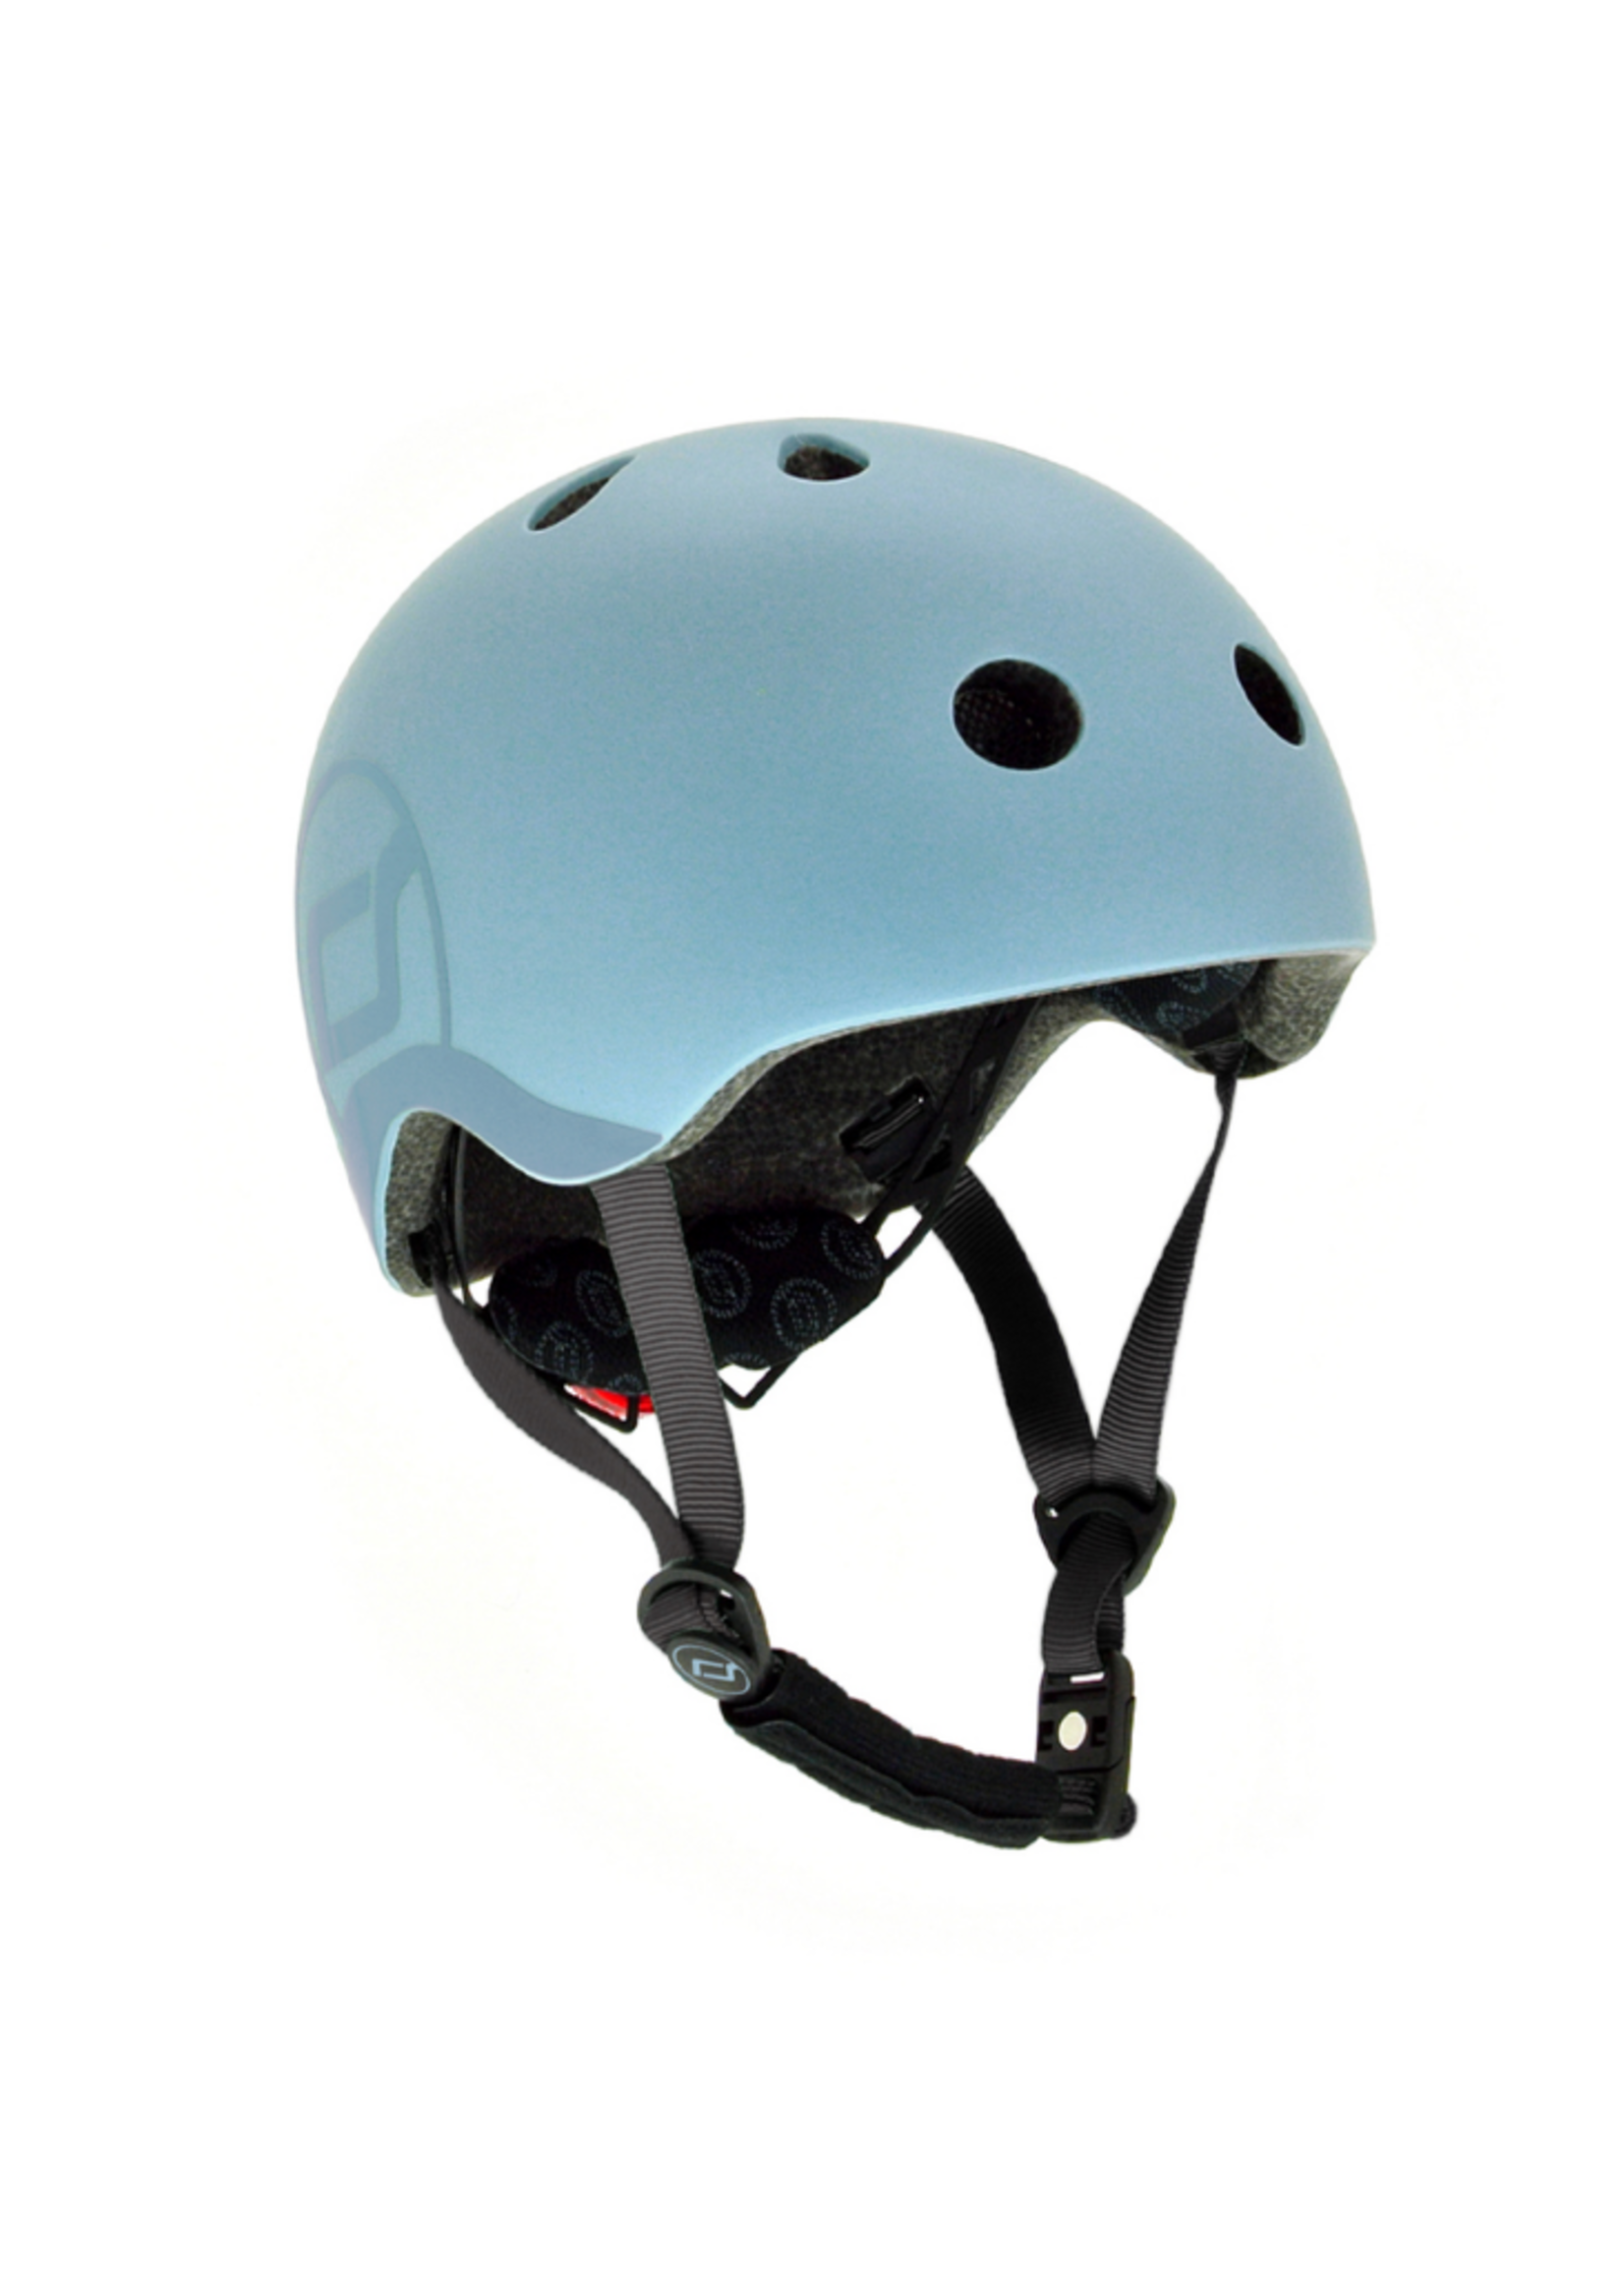 Scoot and Ride Helmet - Small/Medium - Steel